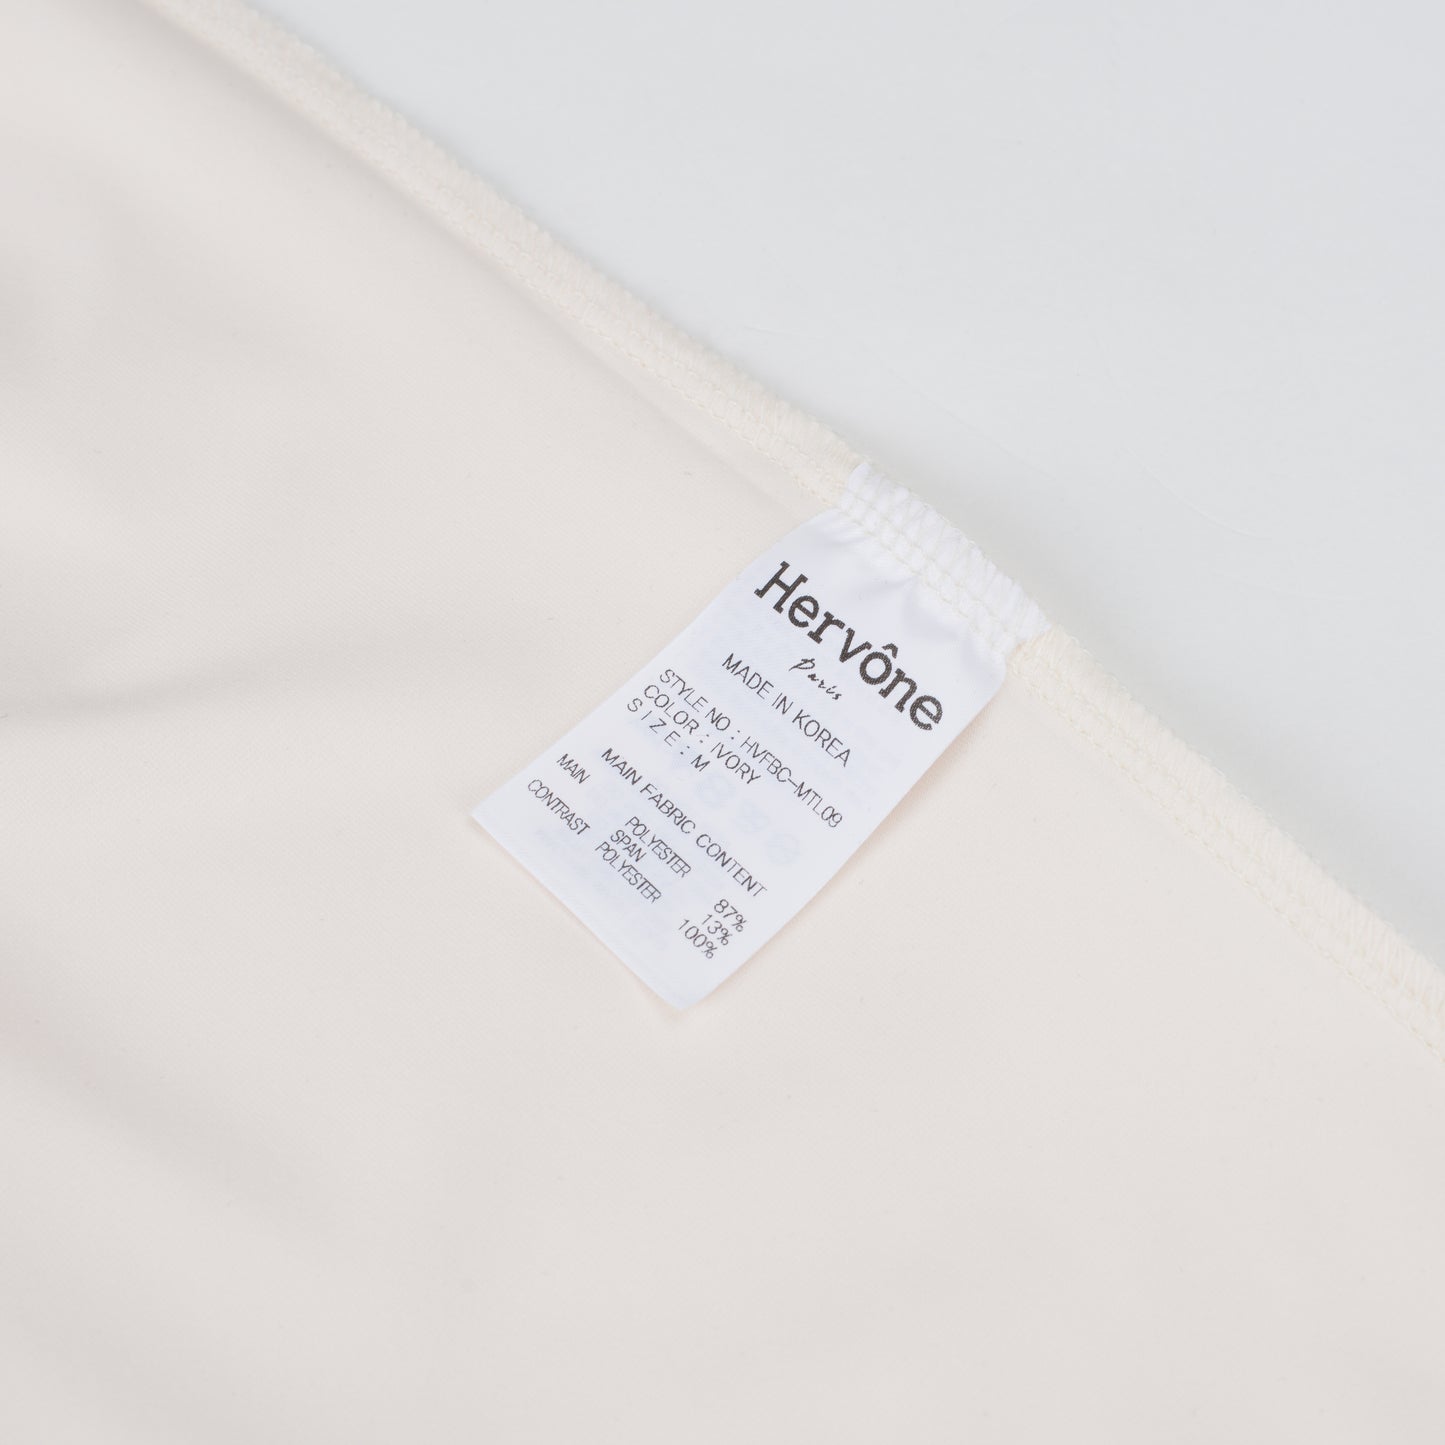 Men's Renoir Long Sleeves Polo T-Shirt Ivory